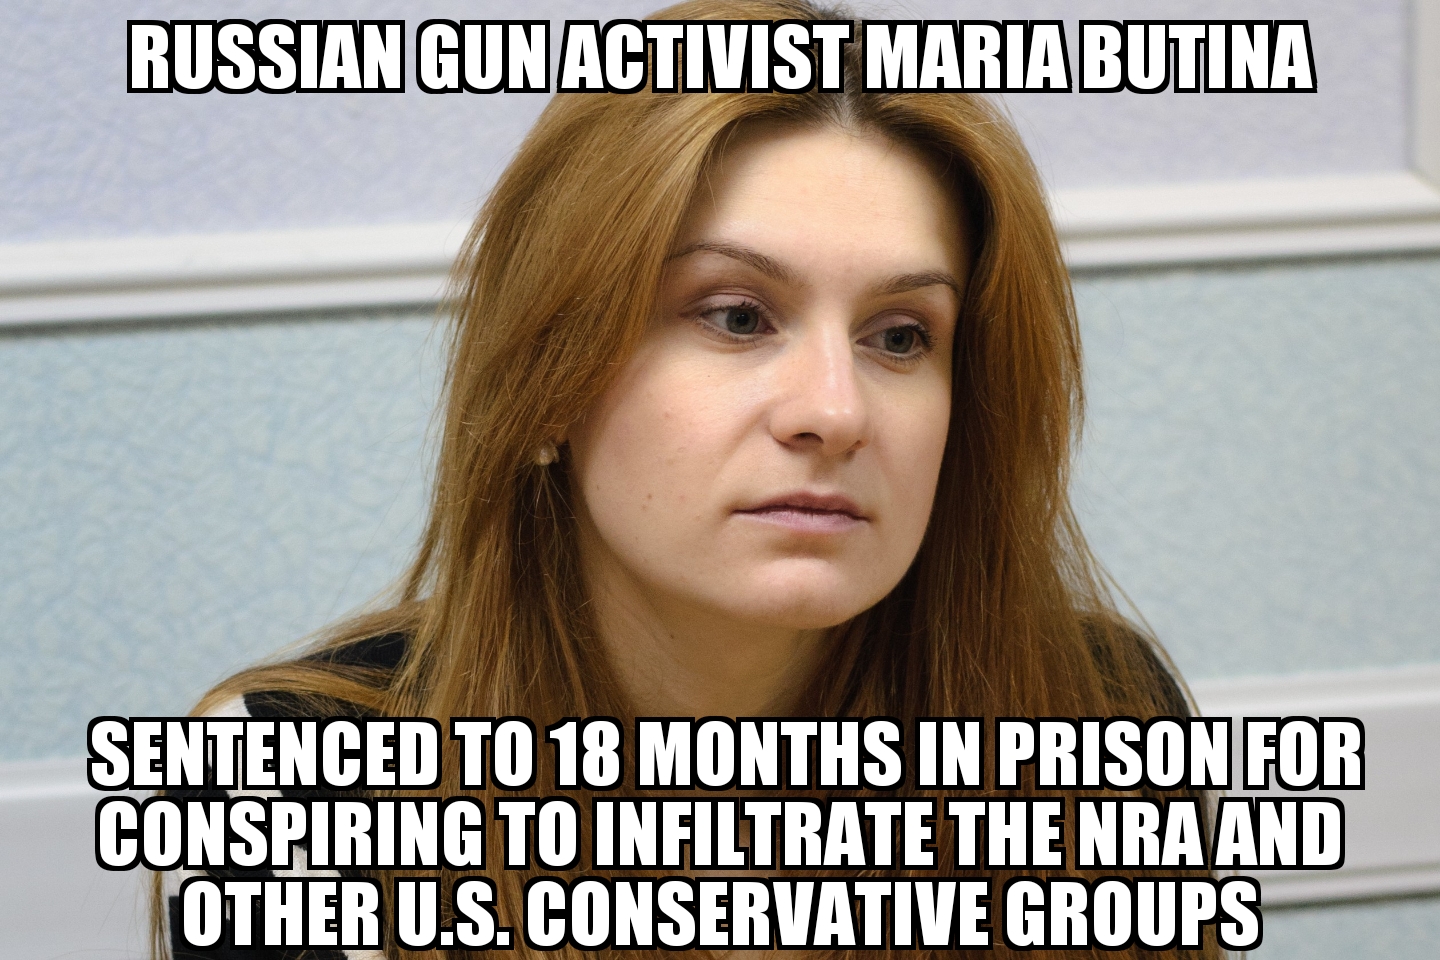 Maria Butina sentenced to 18 months in prison